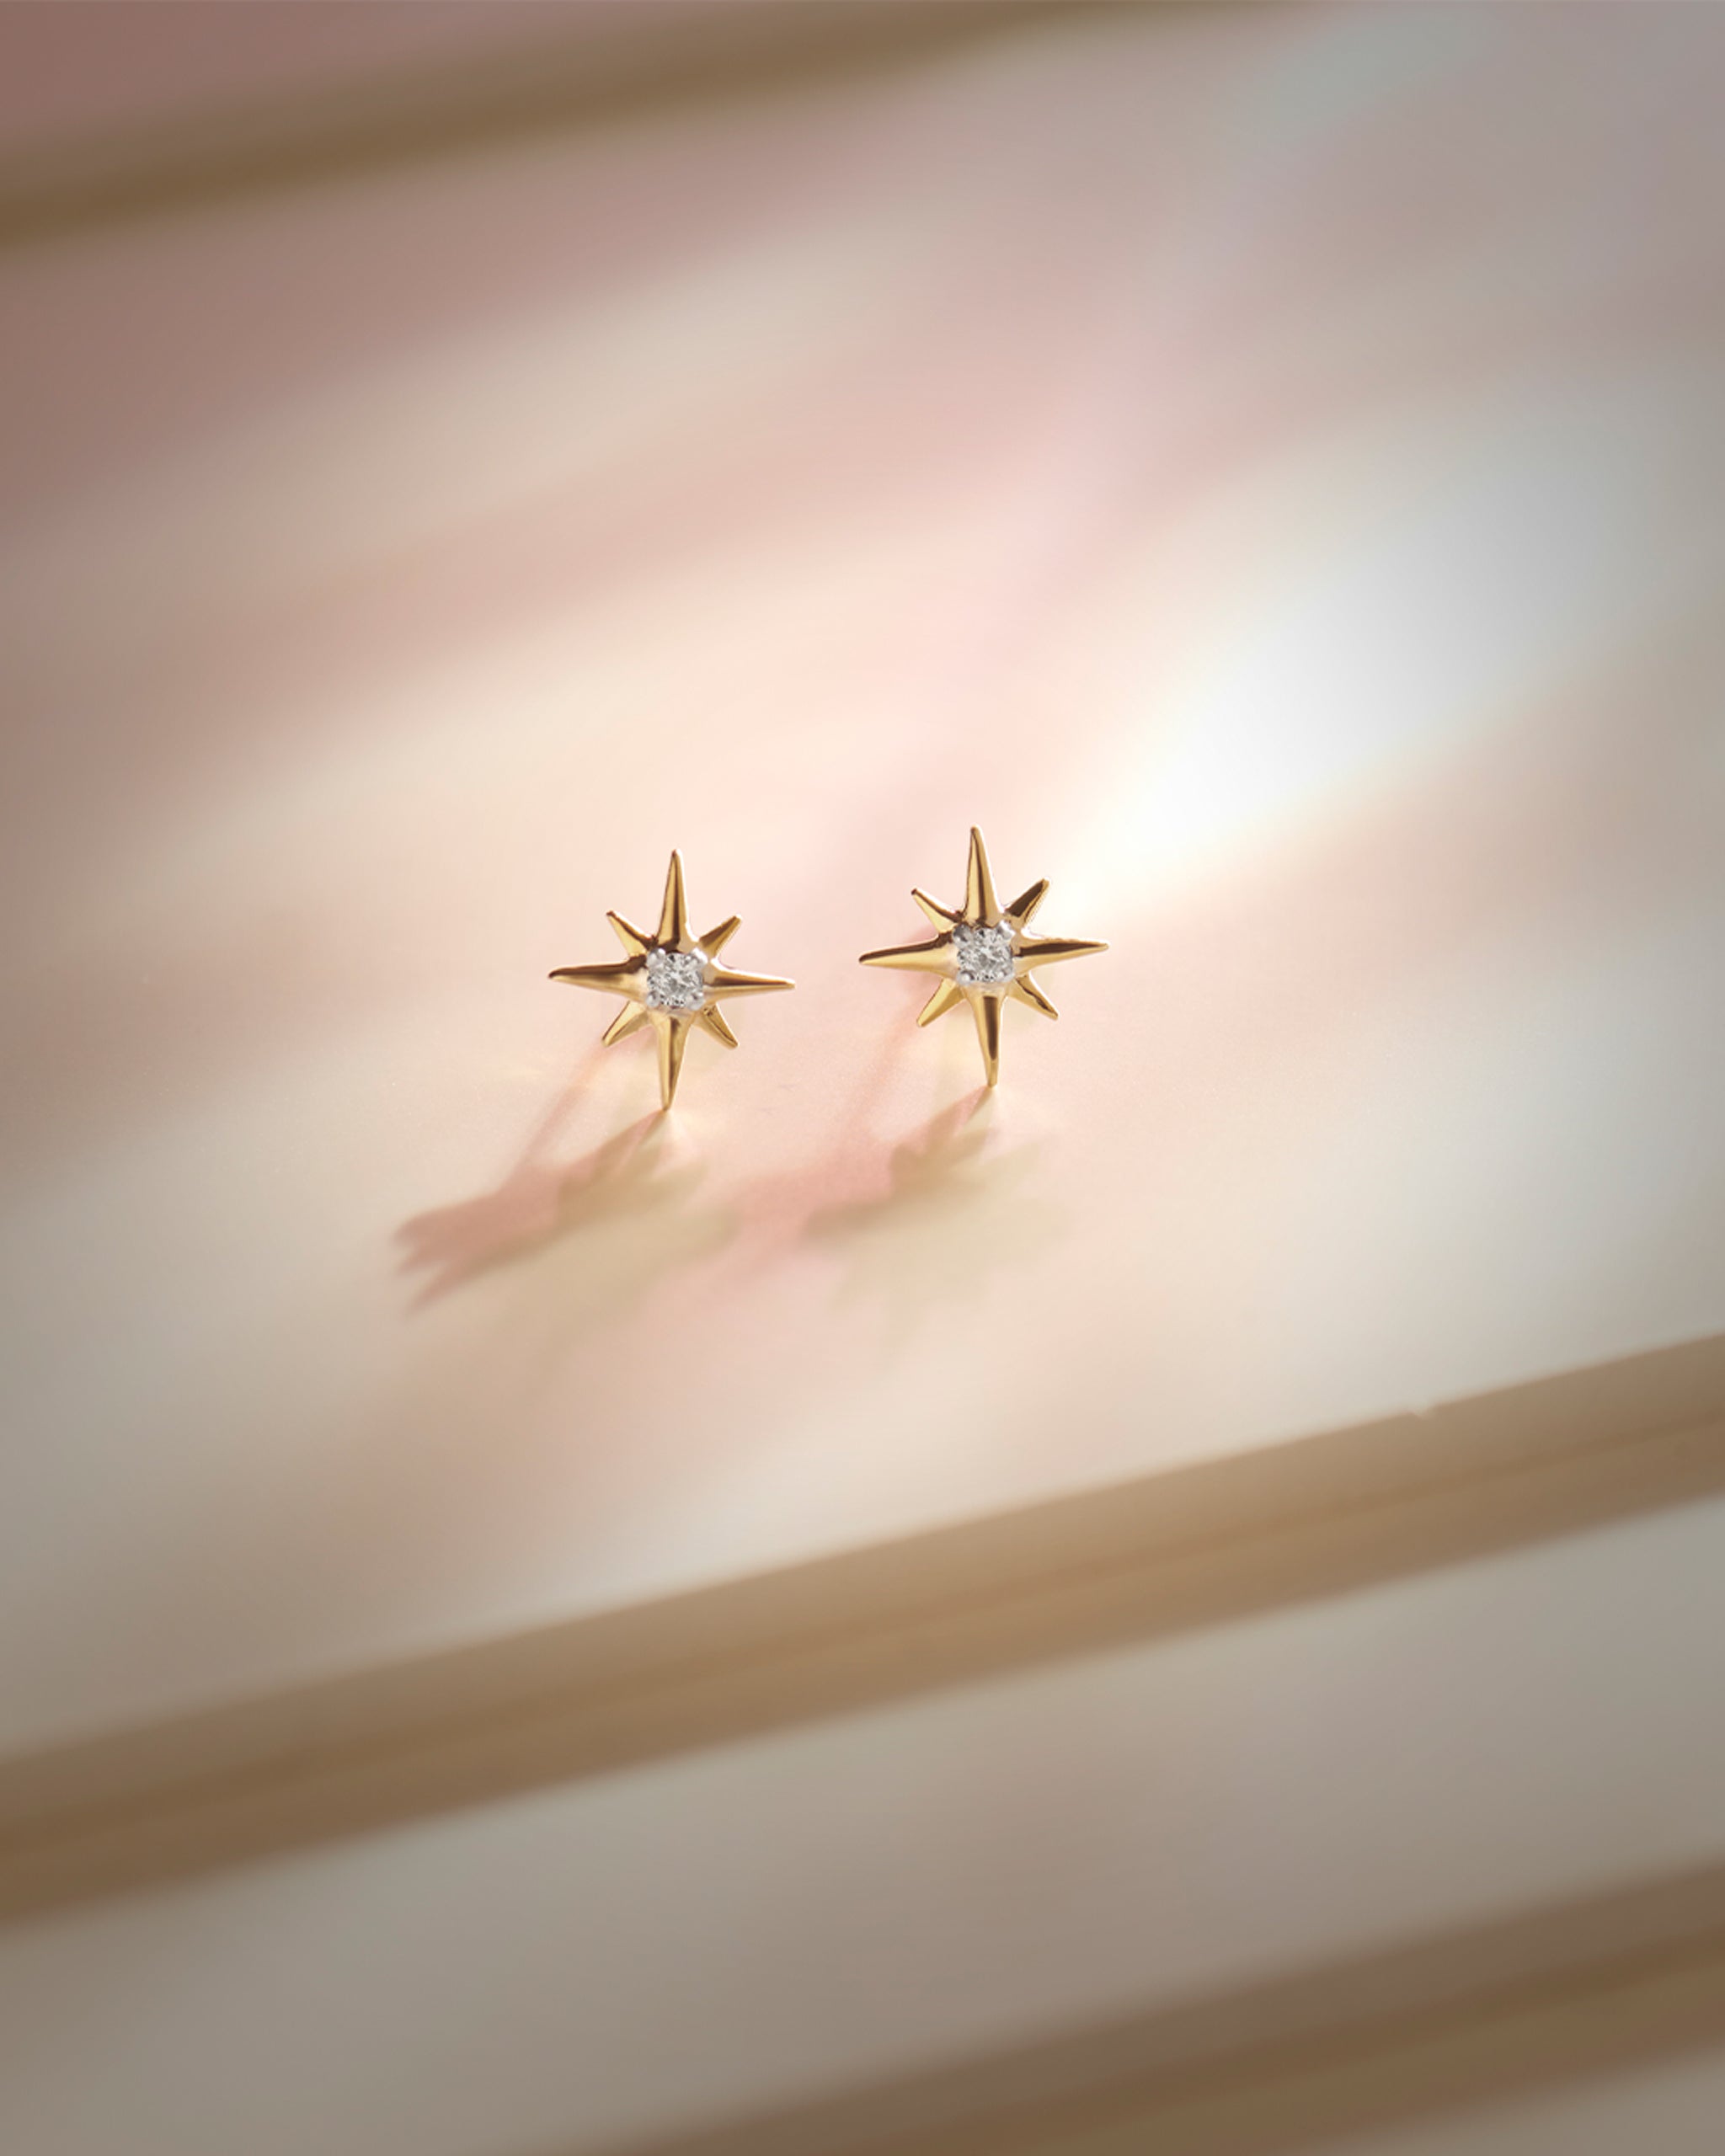 North Star Small Diamond Earrings